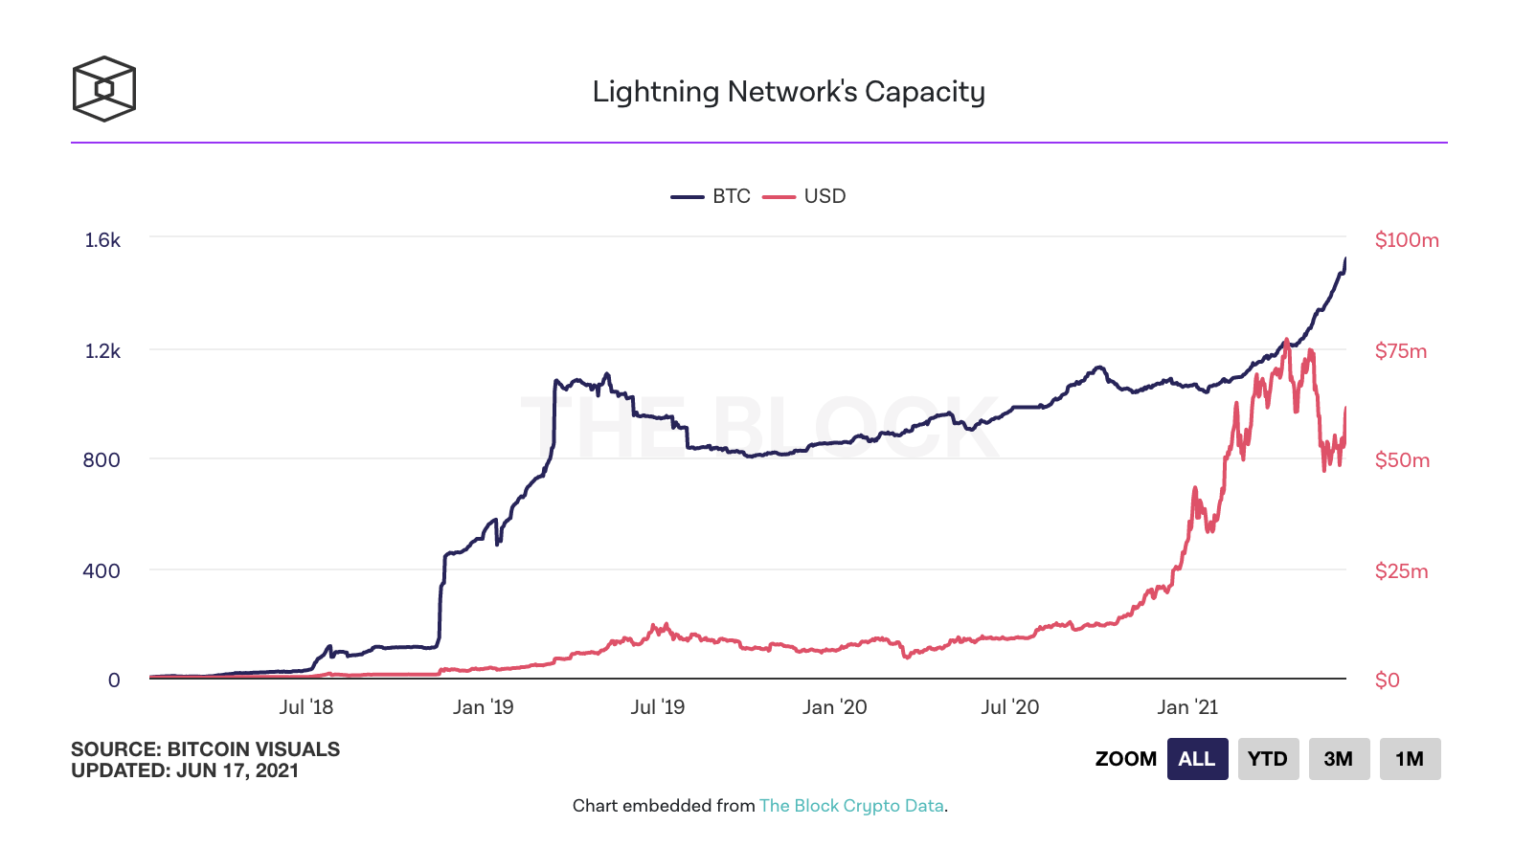 Bitcoin (BTC) Lightning Network Capacity Increases Rapidly ...